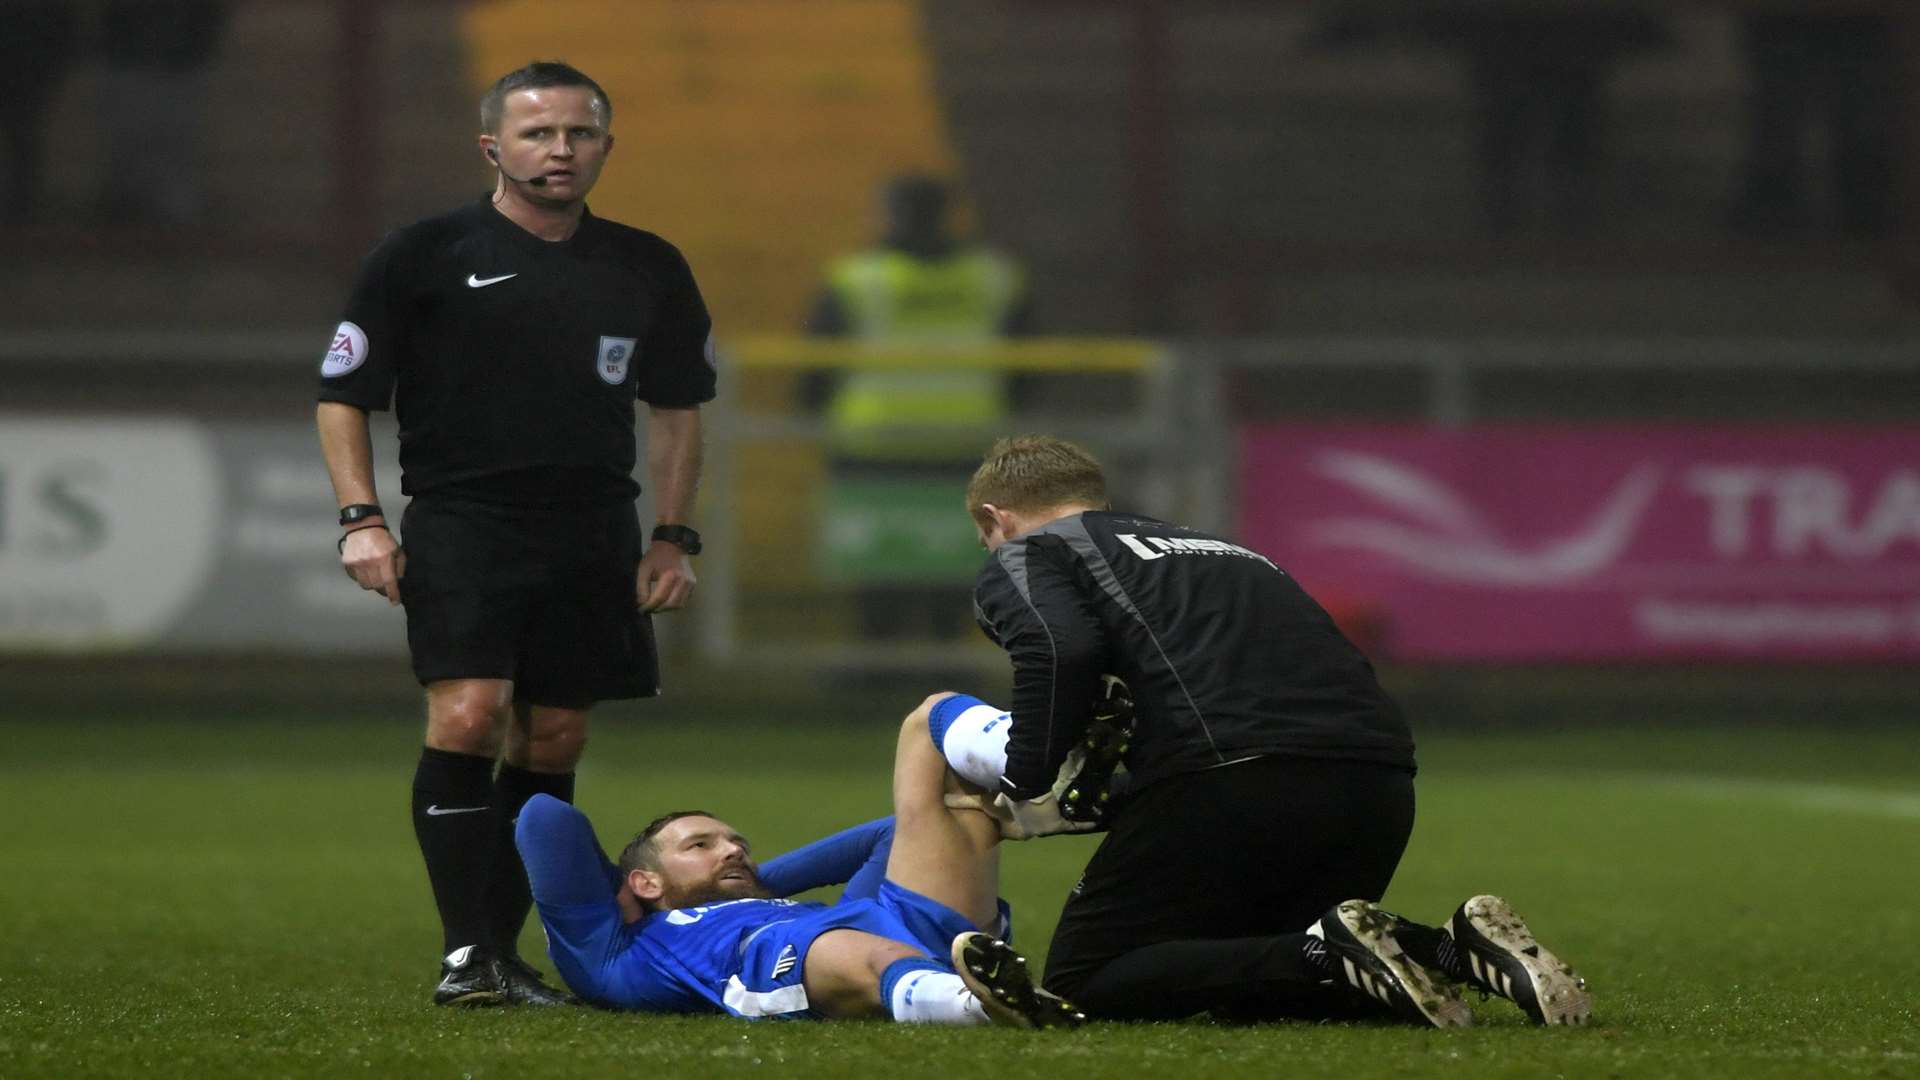 Physio Gary Hemens treats Scott Wagstaff on the pitch Picture: Barry Goodwin